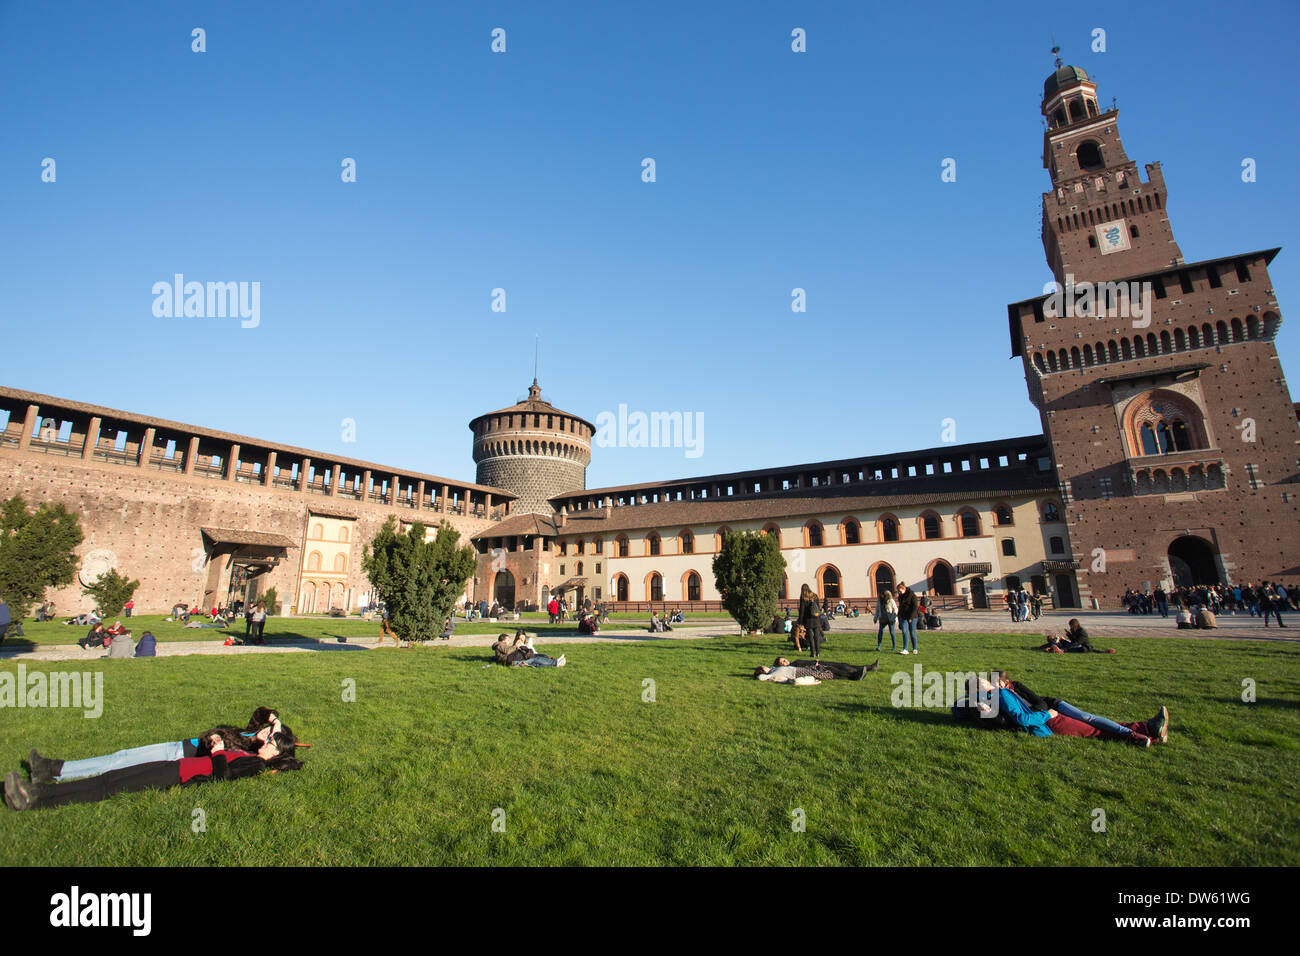 Castello Sforzesco castle, Castello Milano, Milan Castello, Lombardy, Italy Stock Photo